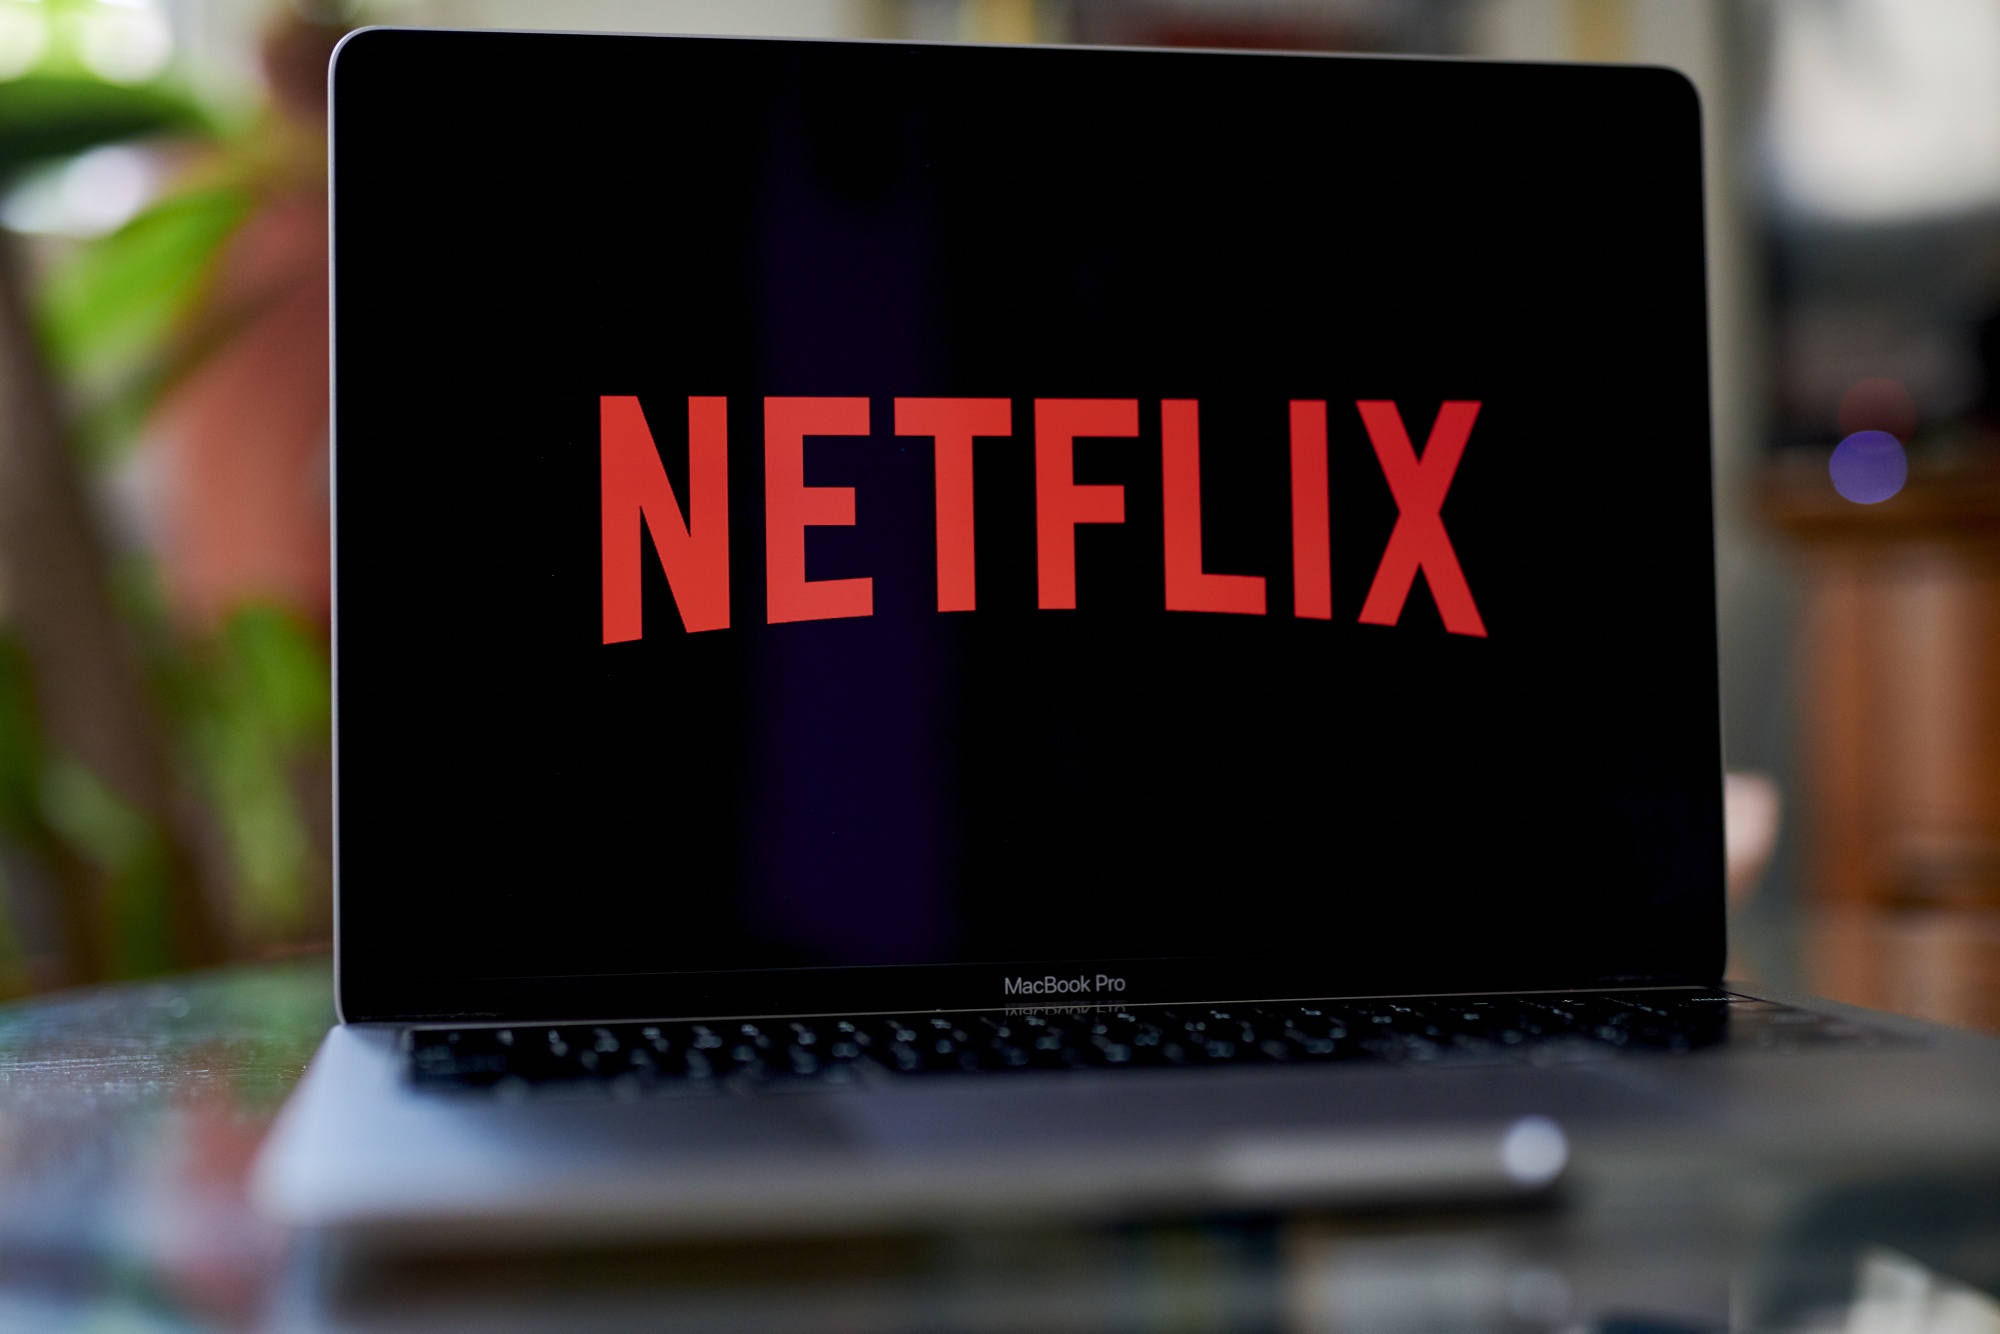 Netflix Launches Free Plan in Kenya - About Netflix